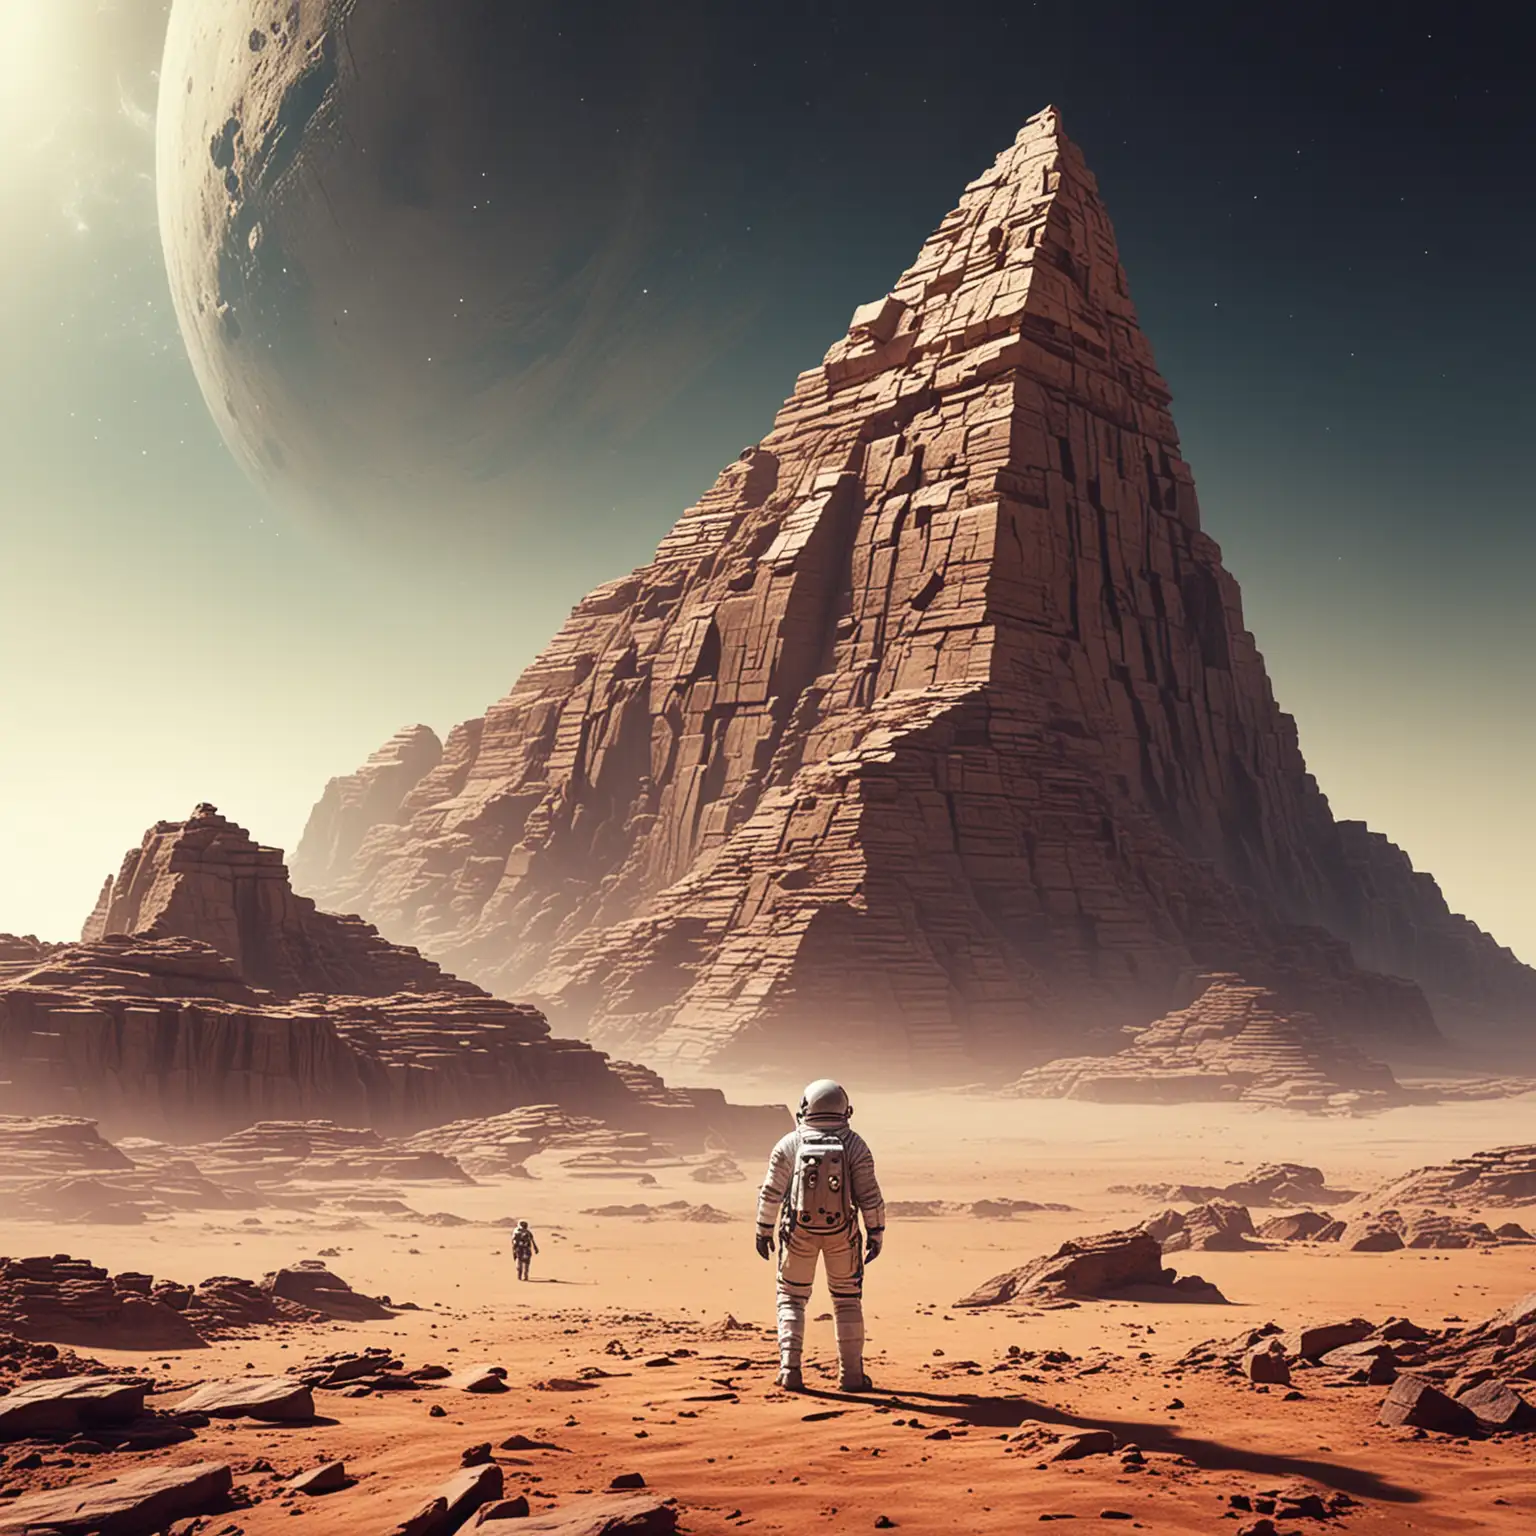 Astronaut on desert planet looking at a large ziggurat